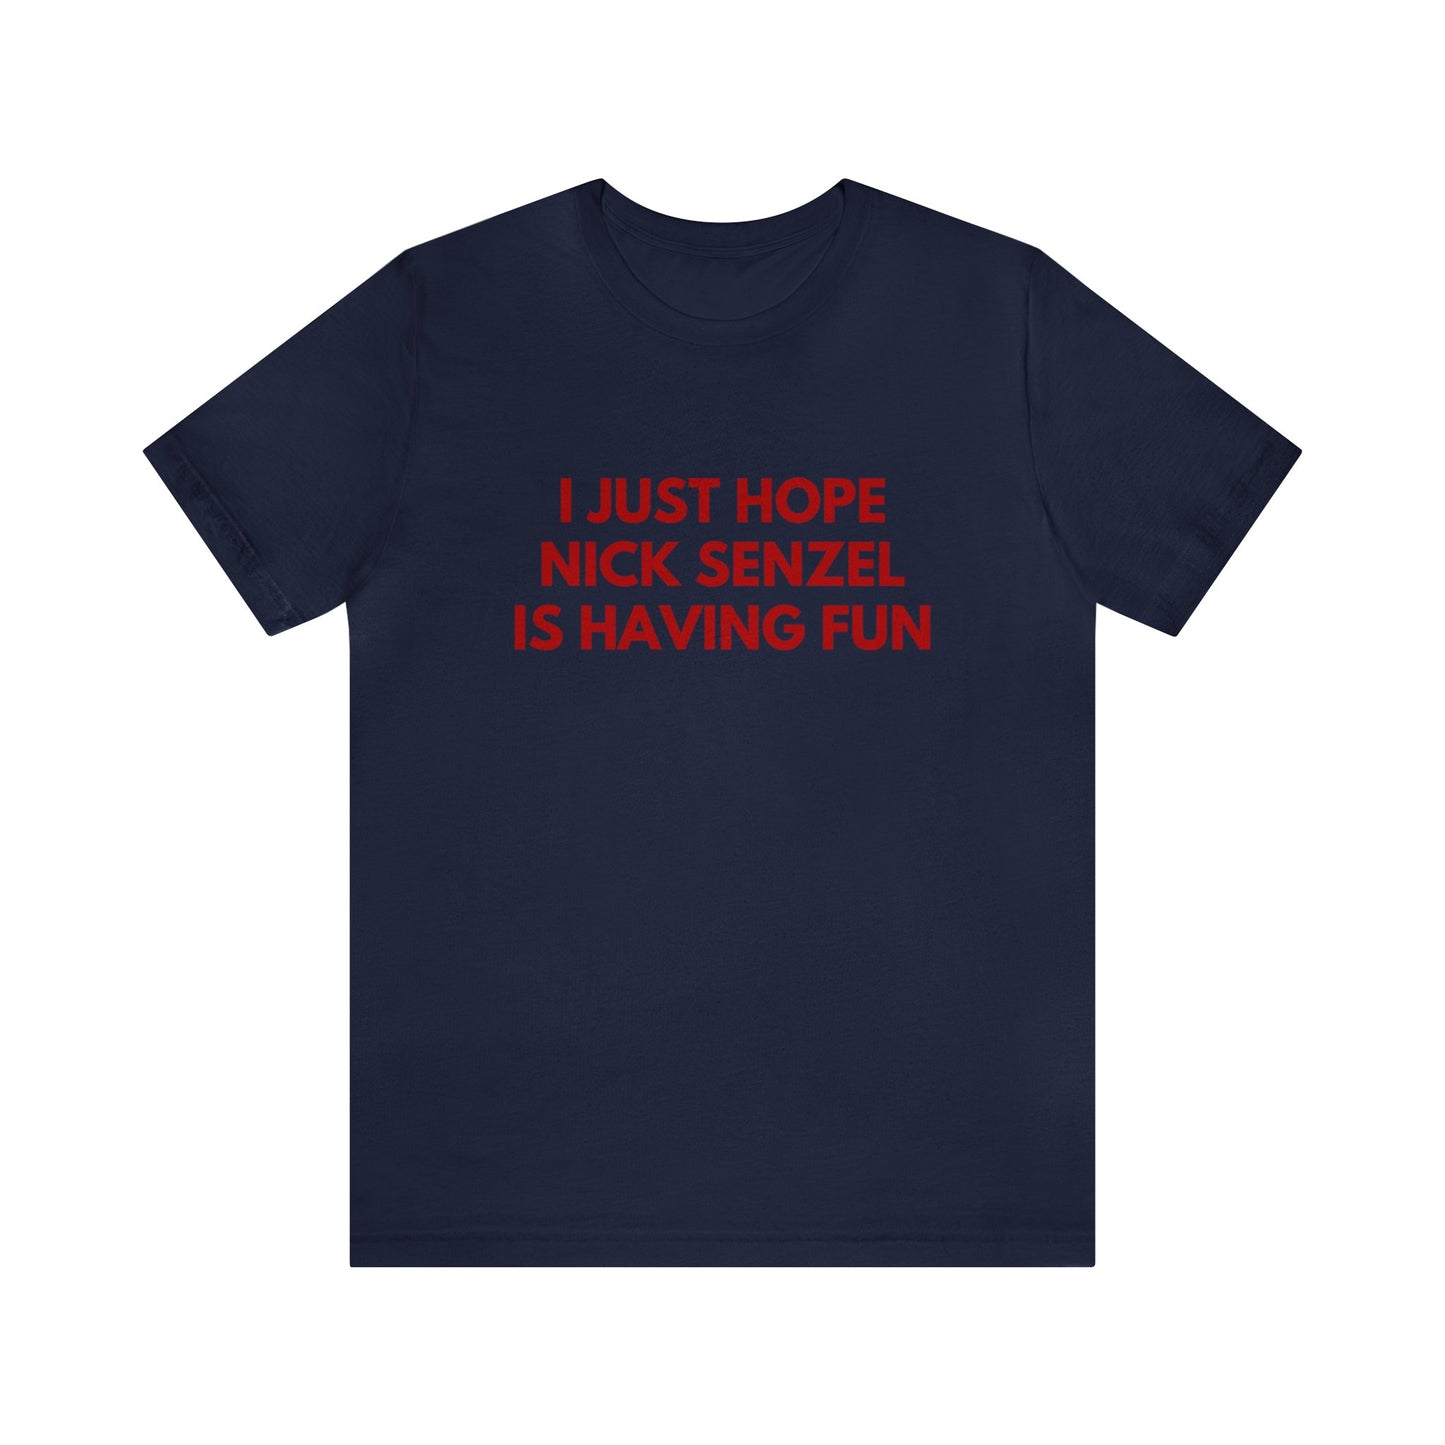 Nick Senzel Having Fun - Unisex T-shirt